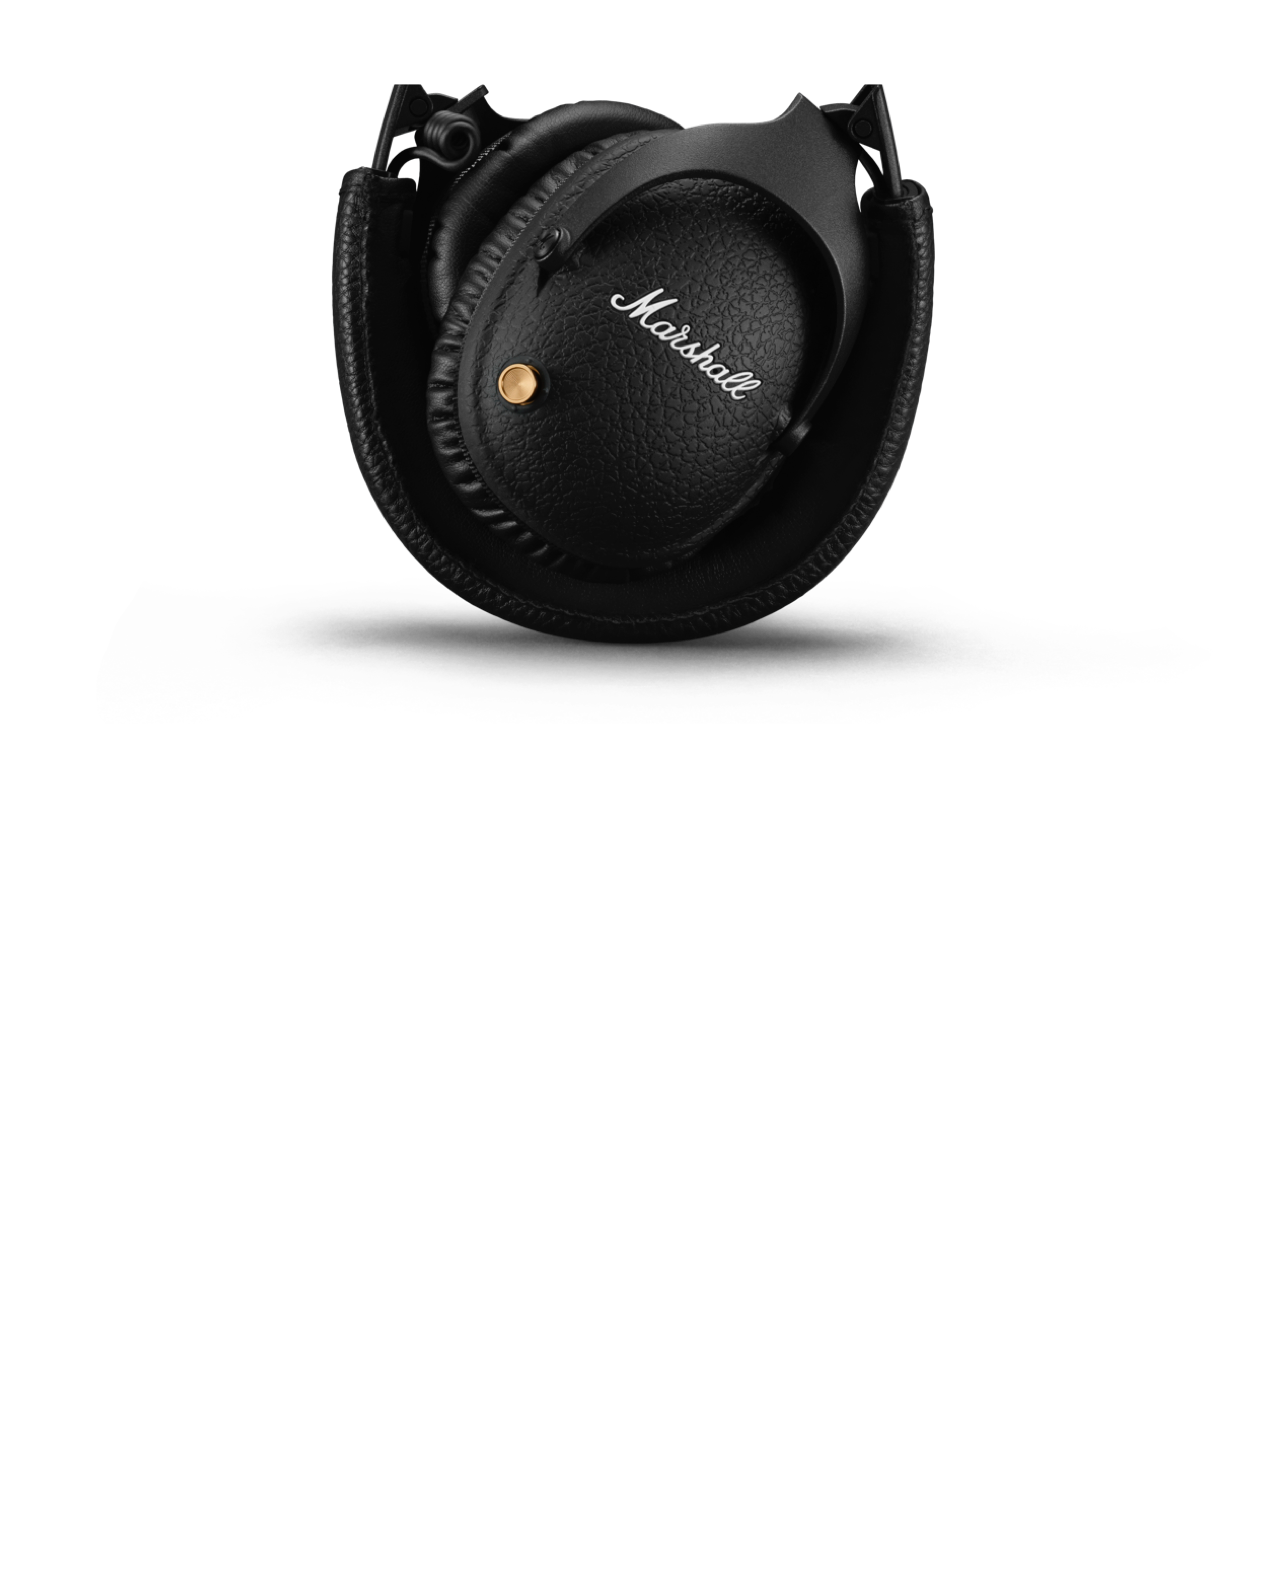 Marshall Monitor II ANC Wireless Headphones